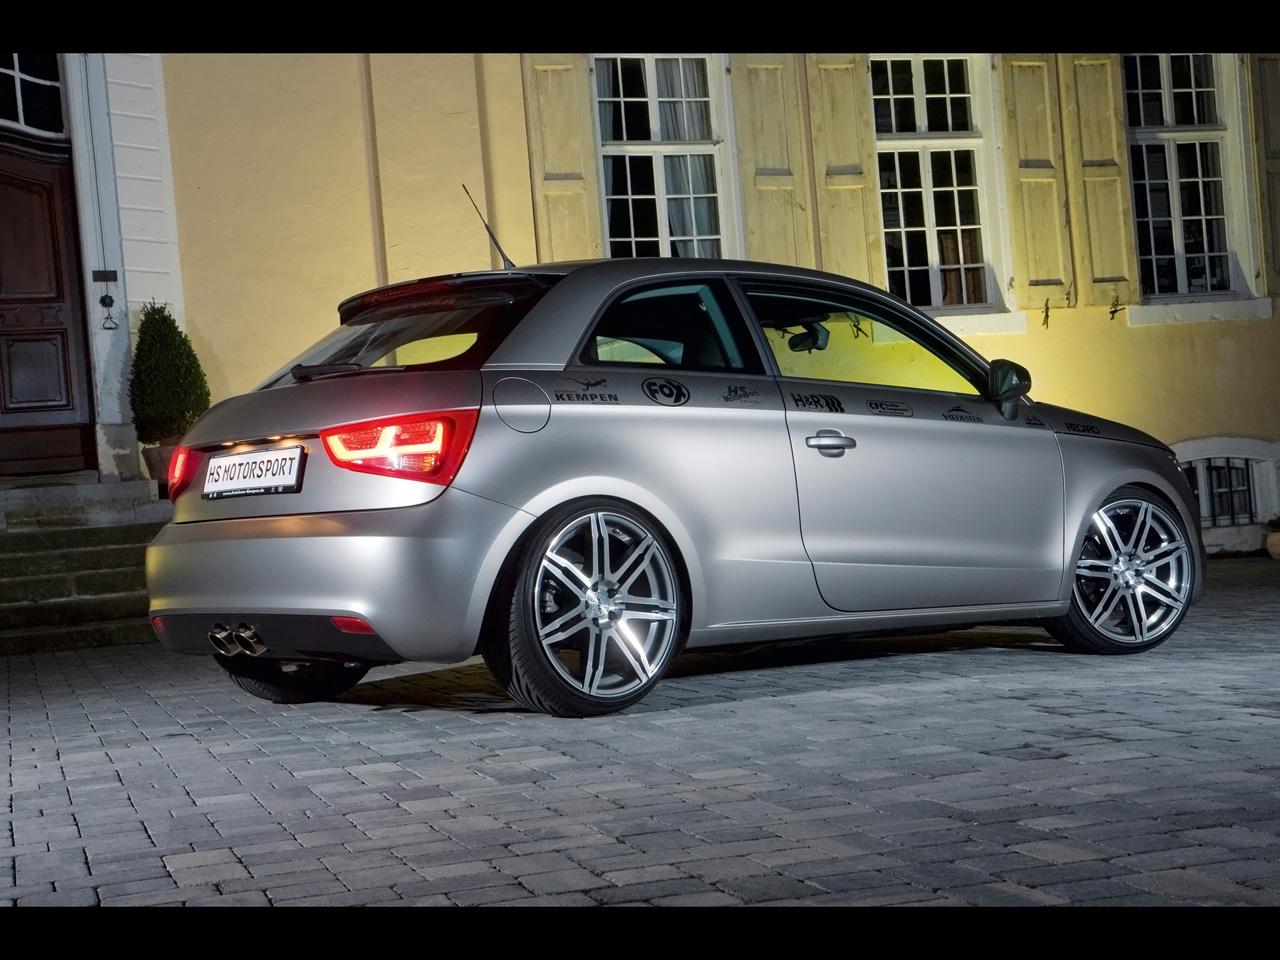 2011 HS Motorsport Audi A1 Wallpapers | Widescreen Desktop Backgrounds